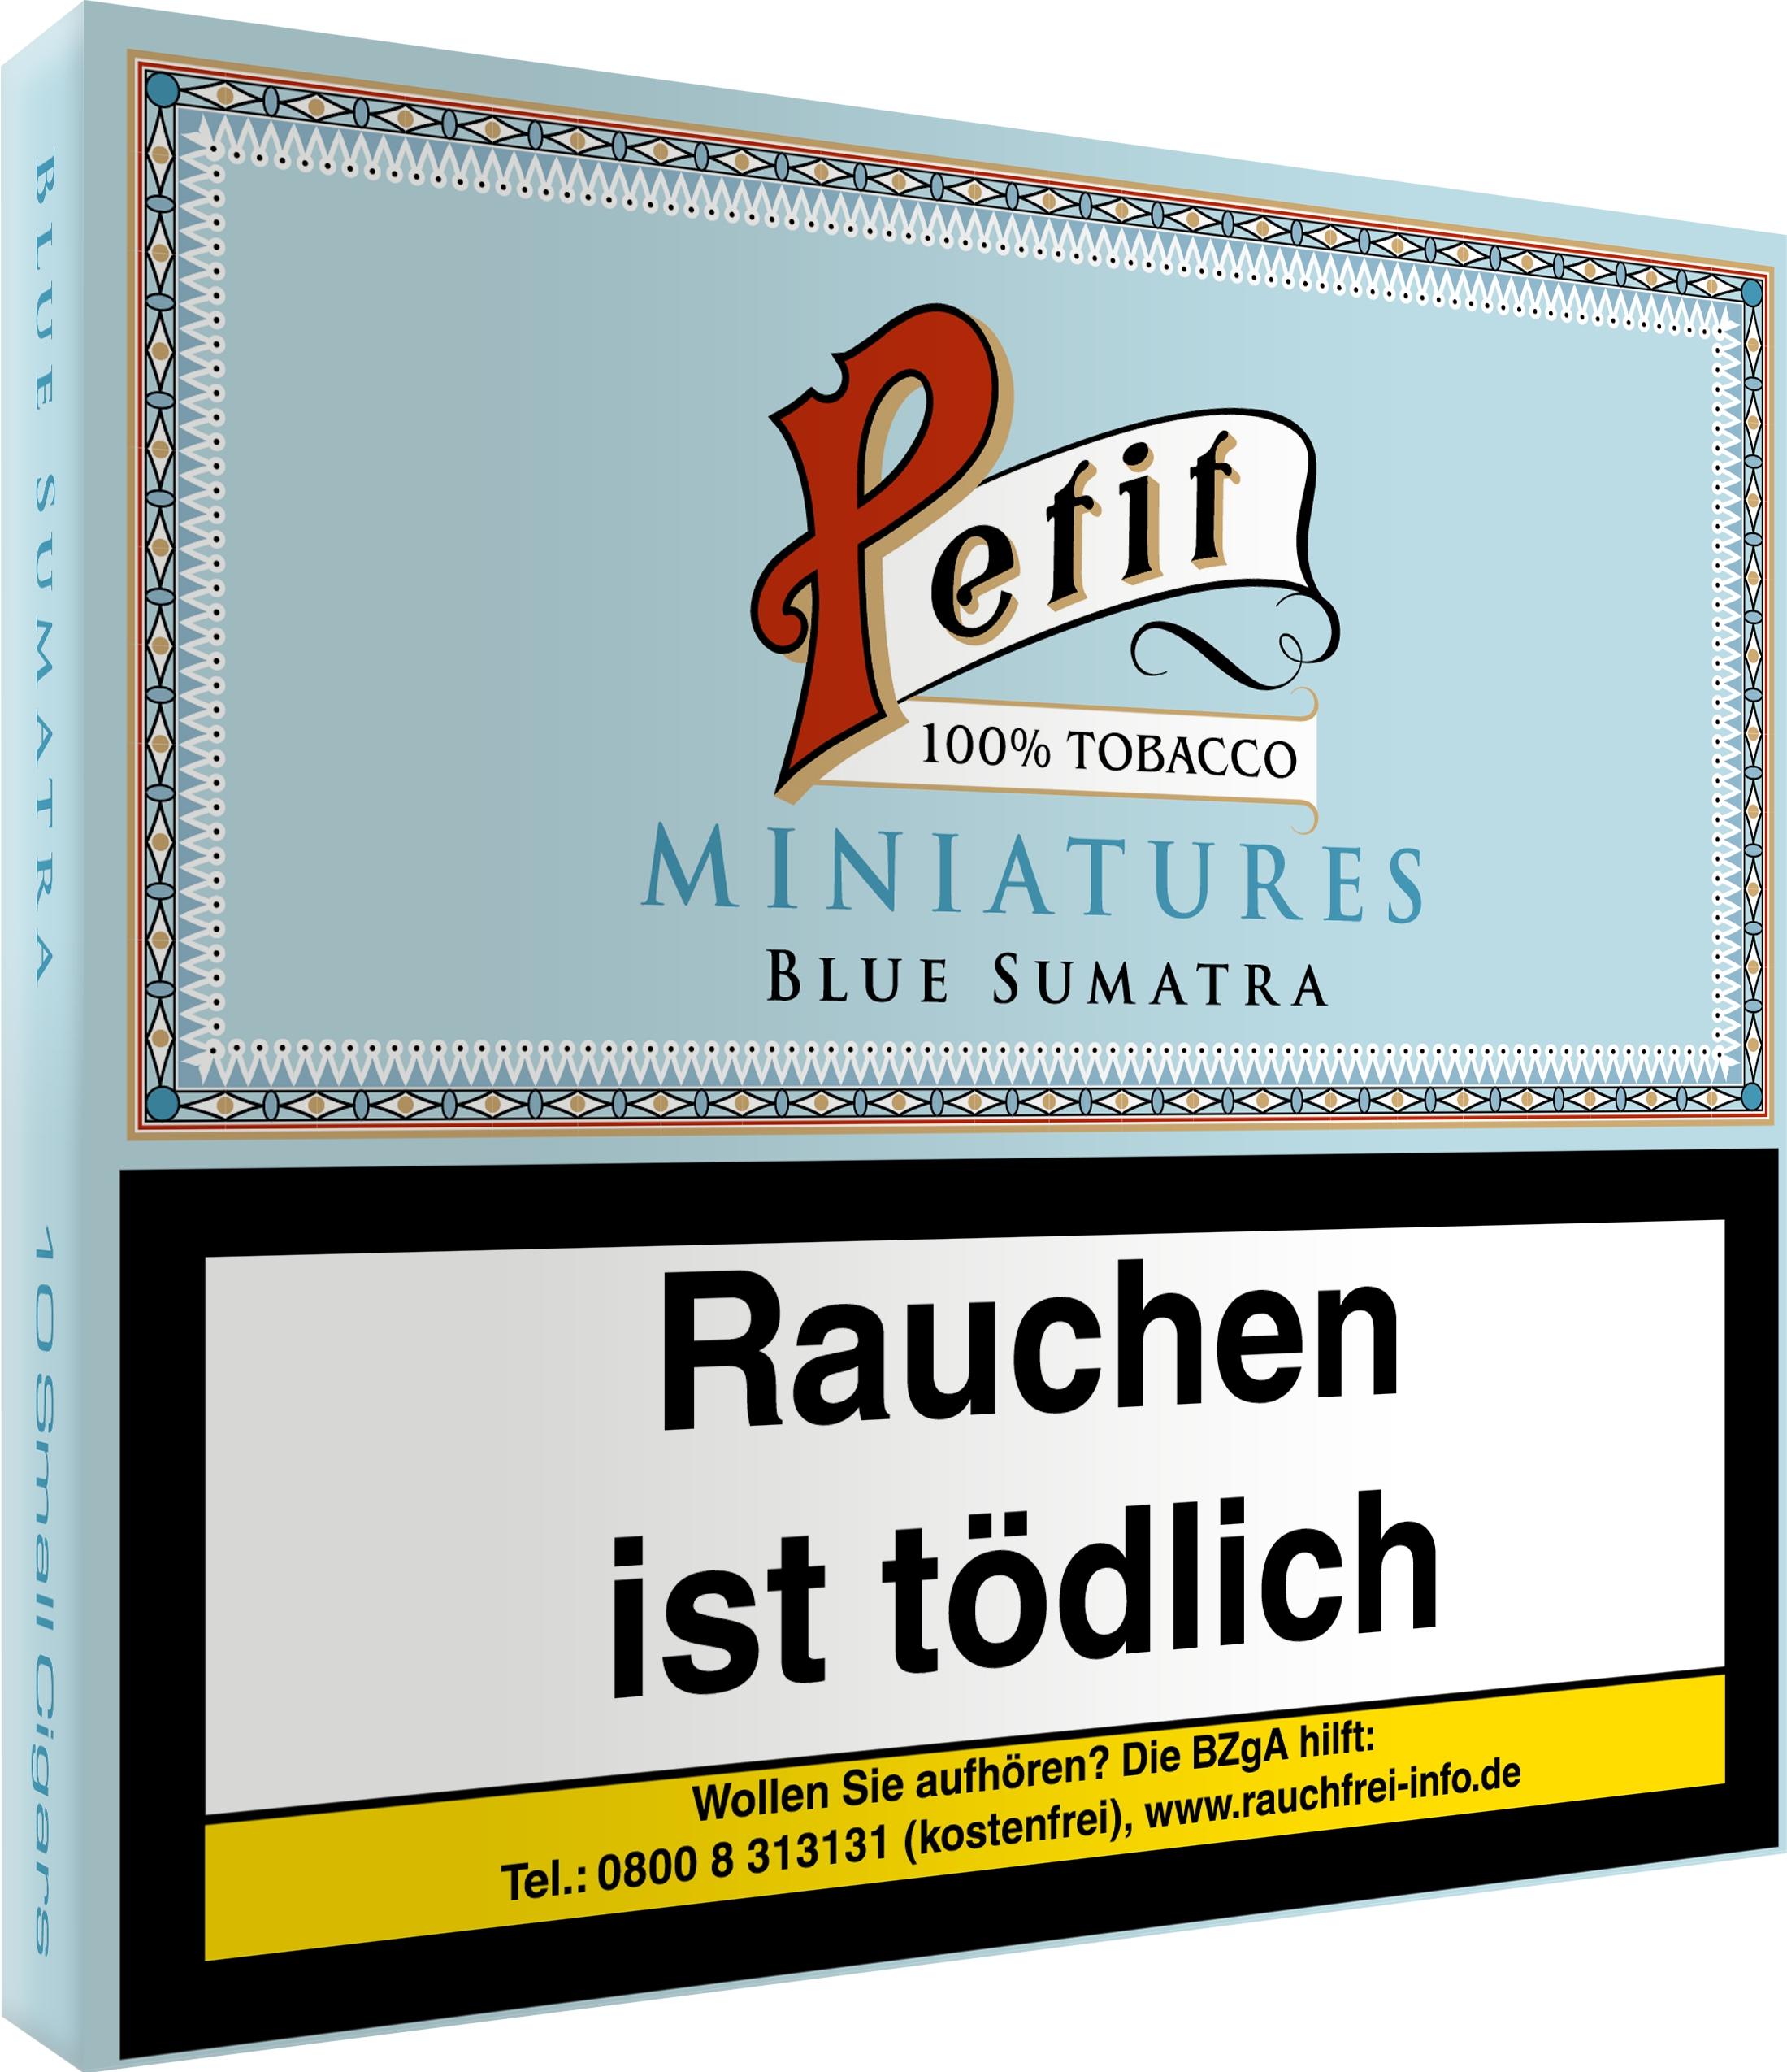 Nobel Petit Zigarillos Miniatures Blue Sumatra 1 Packung